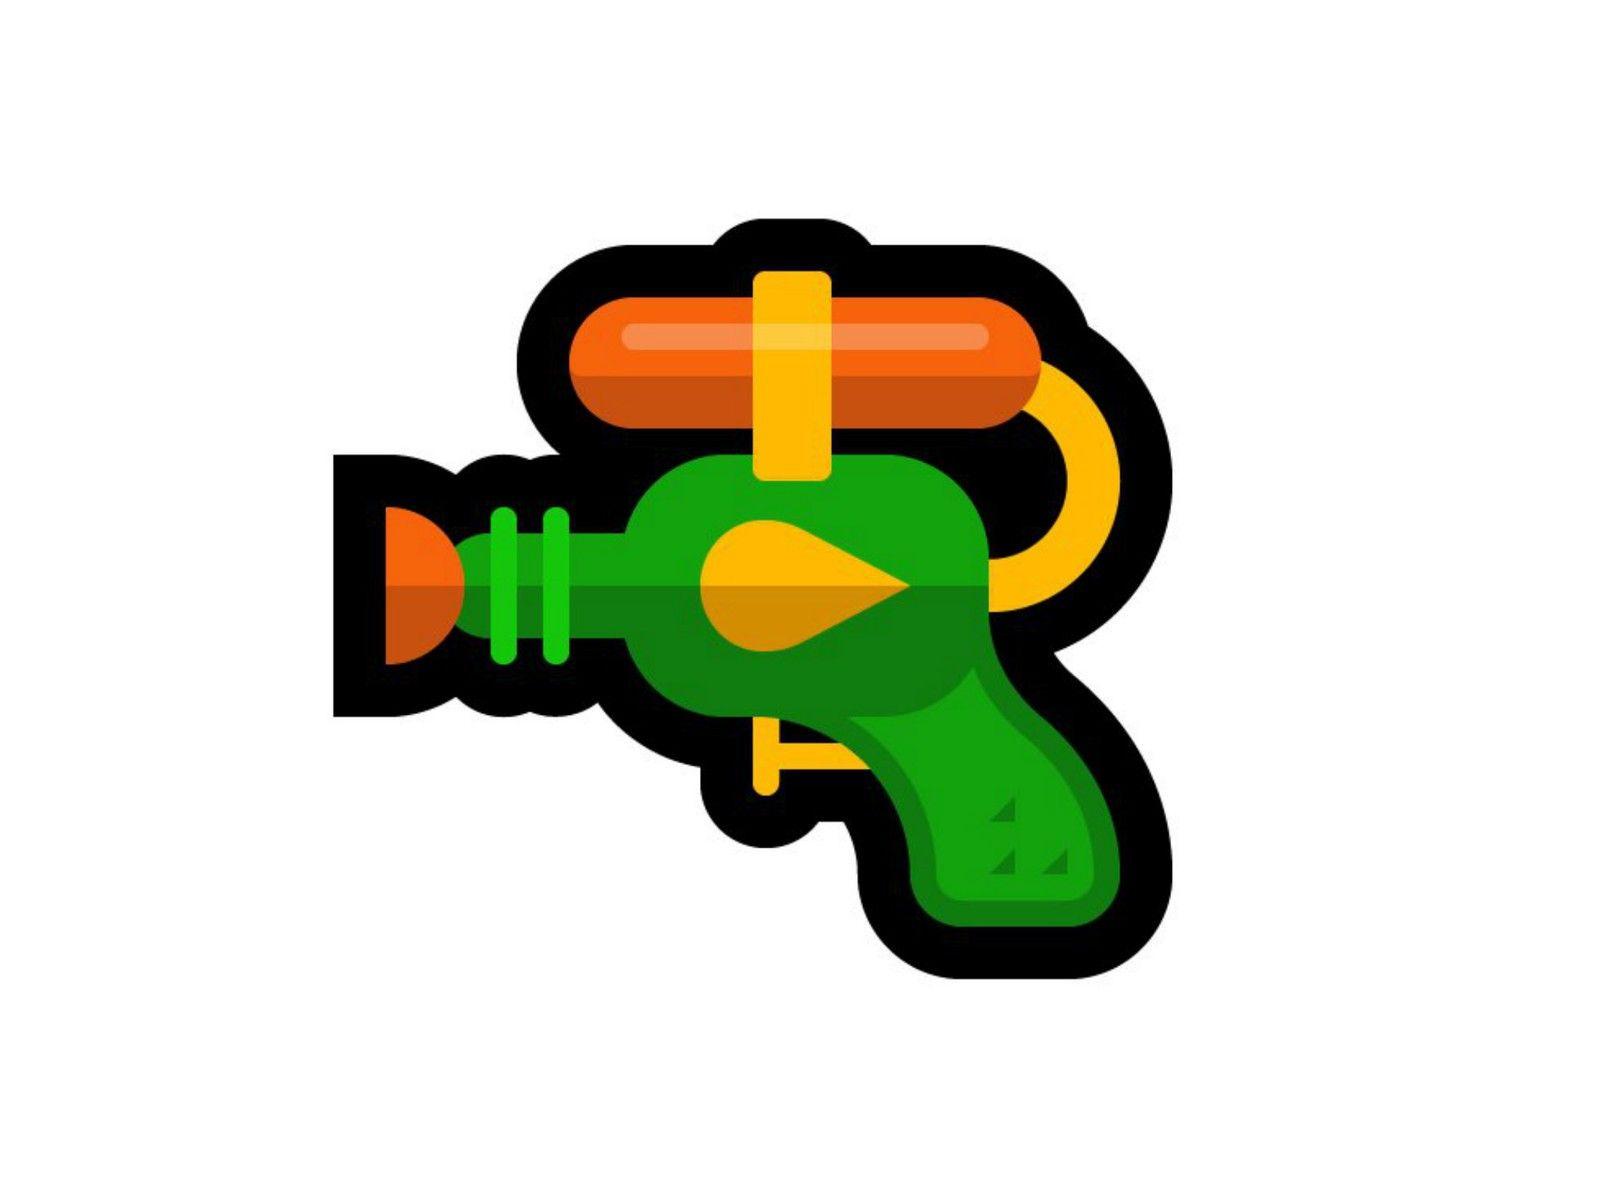 Shoot Emoji Logo - Following other tech companies, Microsoft is giving its pistol emoji